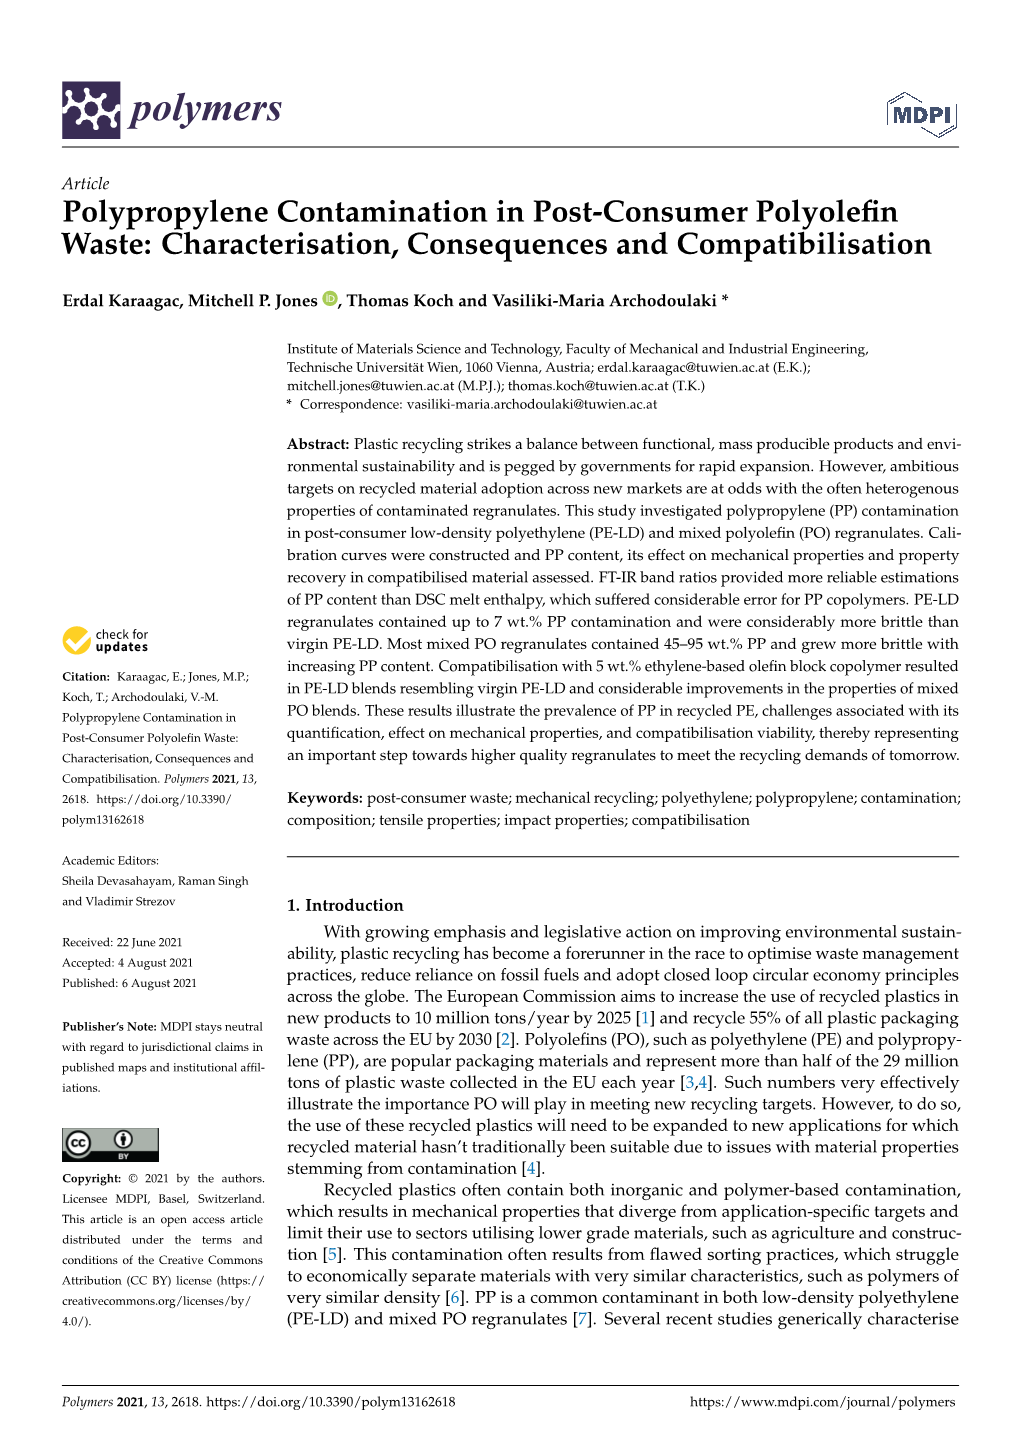 Polypropylene Contamination in Post-Consumer Polyolefin Waste